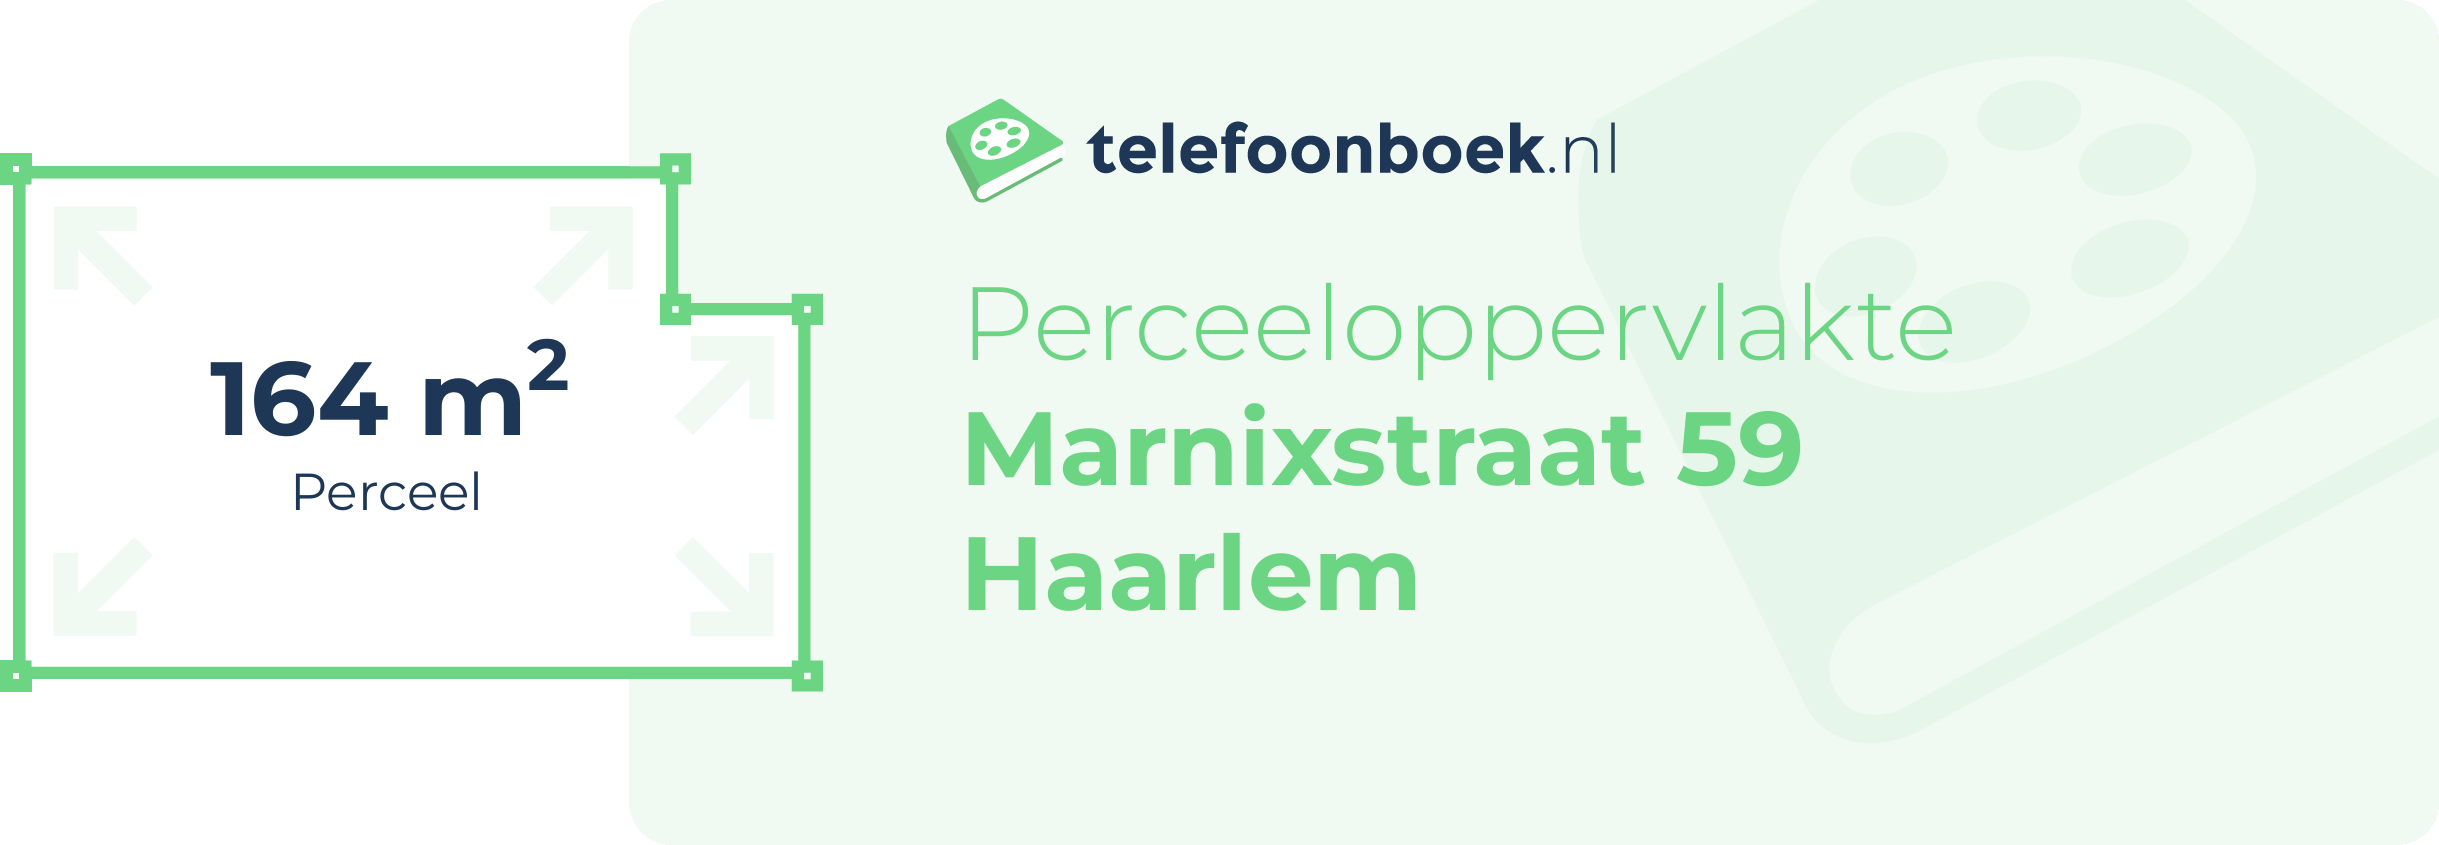 Perceeloppervlakte Marnixstraat 59 Haarlem